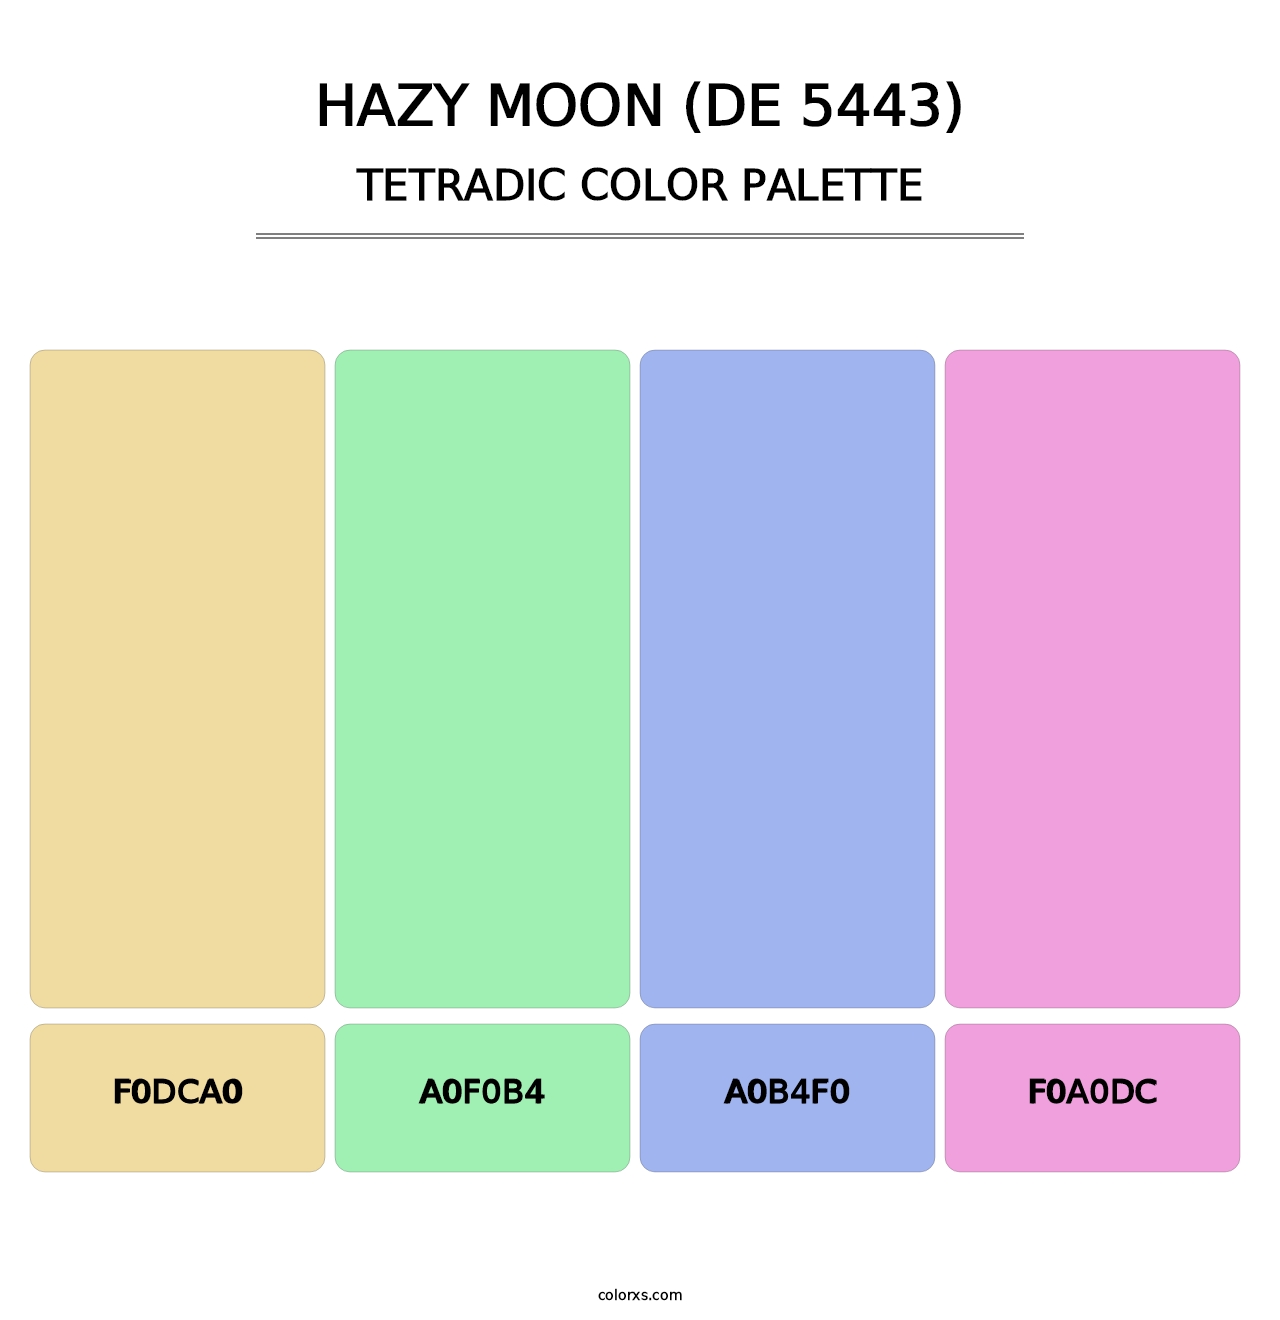 Hazy Moon (DE 5443) - Tetradic Color Palette